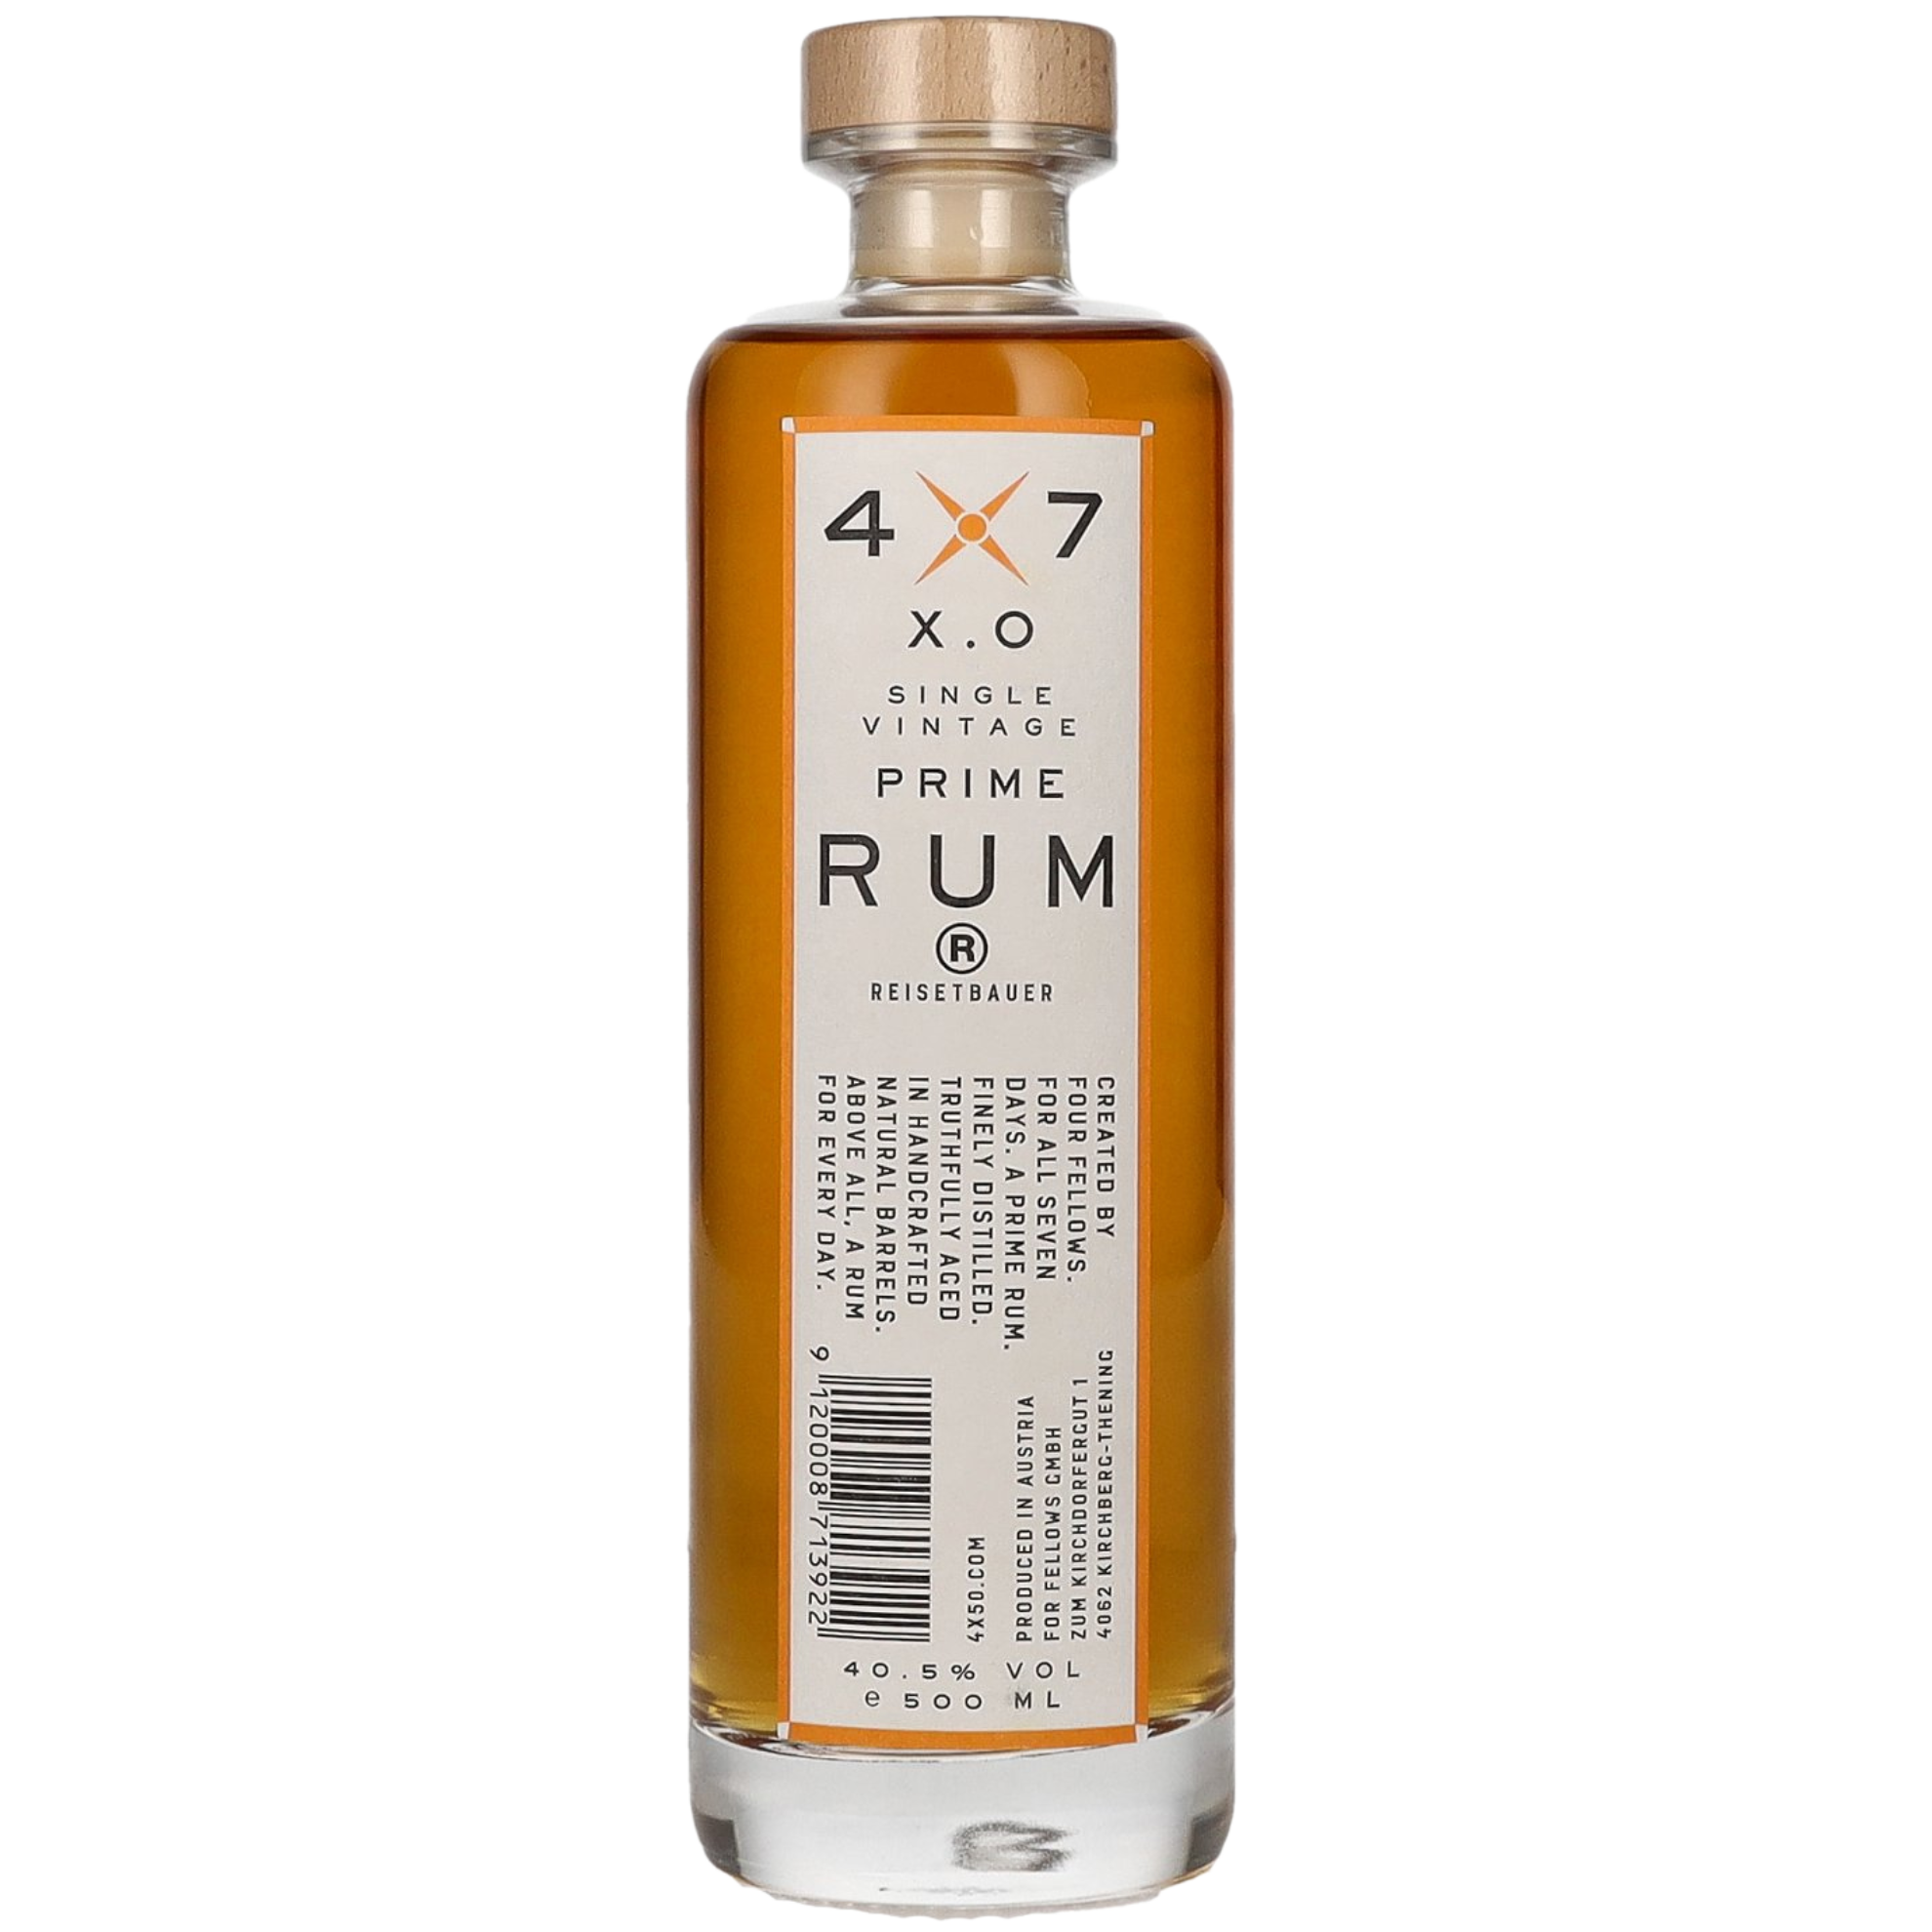 4x7 Single Vintage Rum 40,5% 0,5l